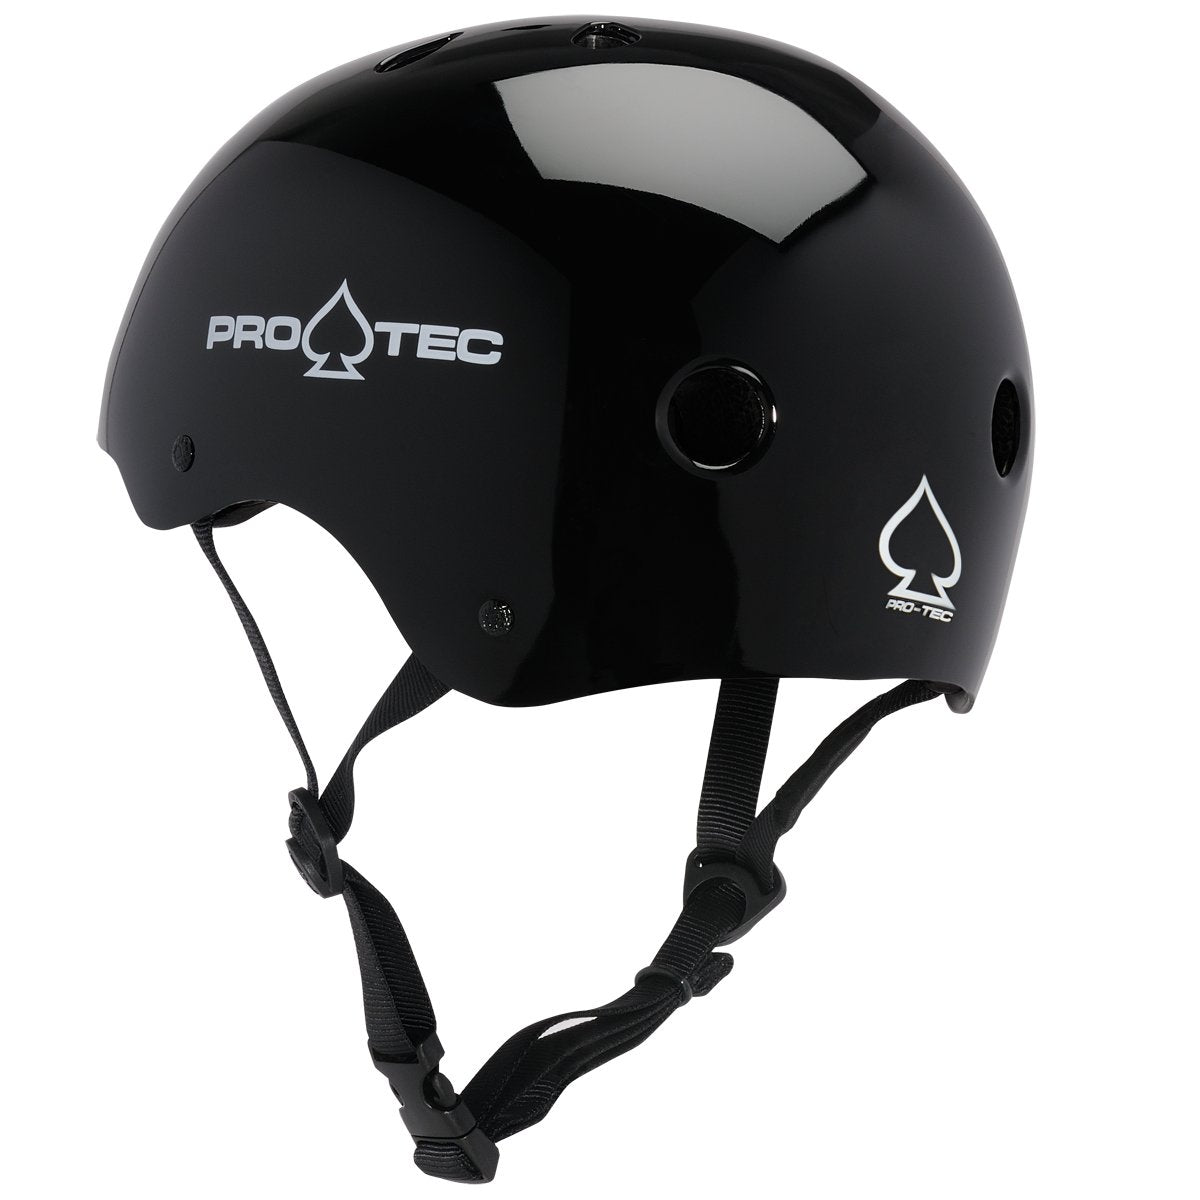 Pro-Tec The Classic Helmet - Gloss Black image 2